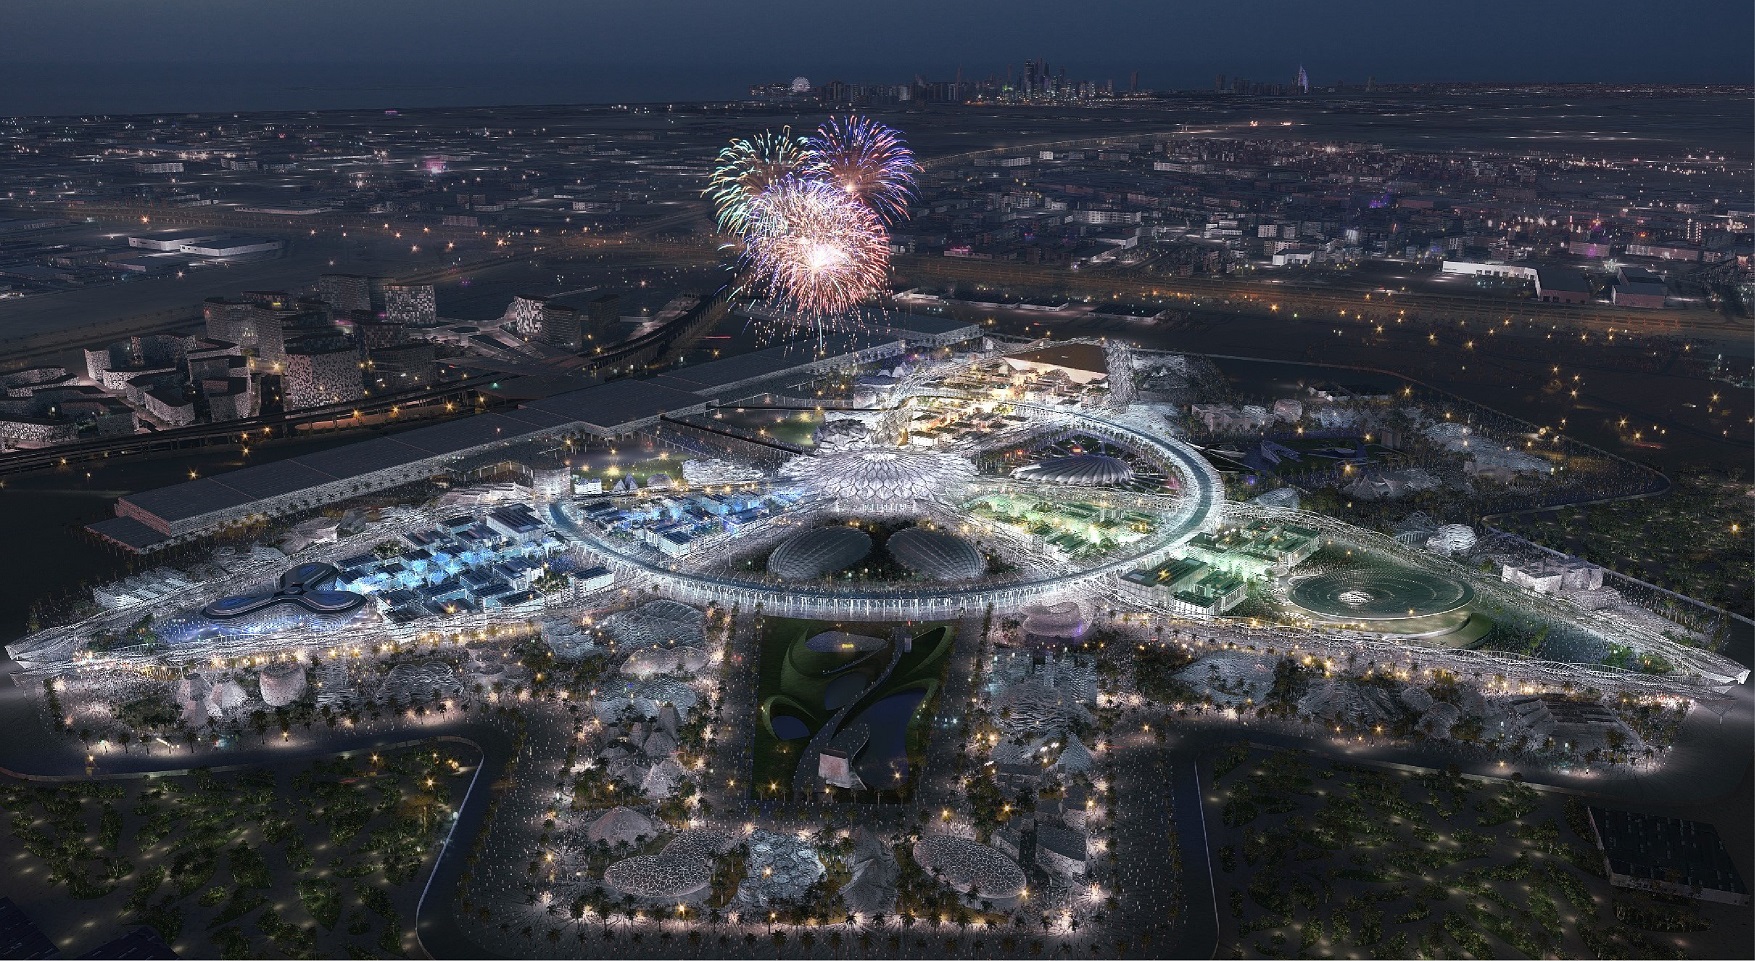 Al Futtaim Carillion to build Theme Districts within the Expo 2020 Dubai site ...